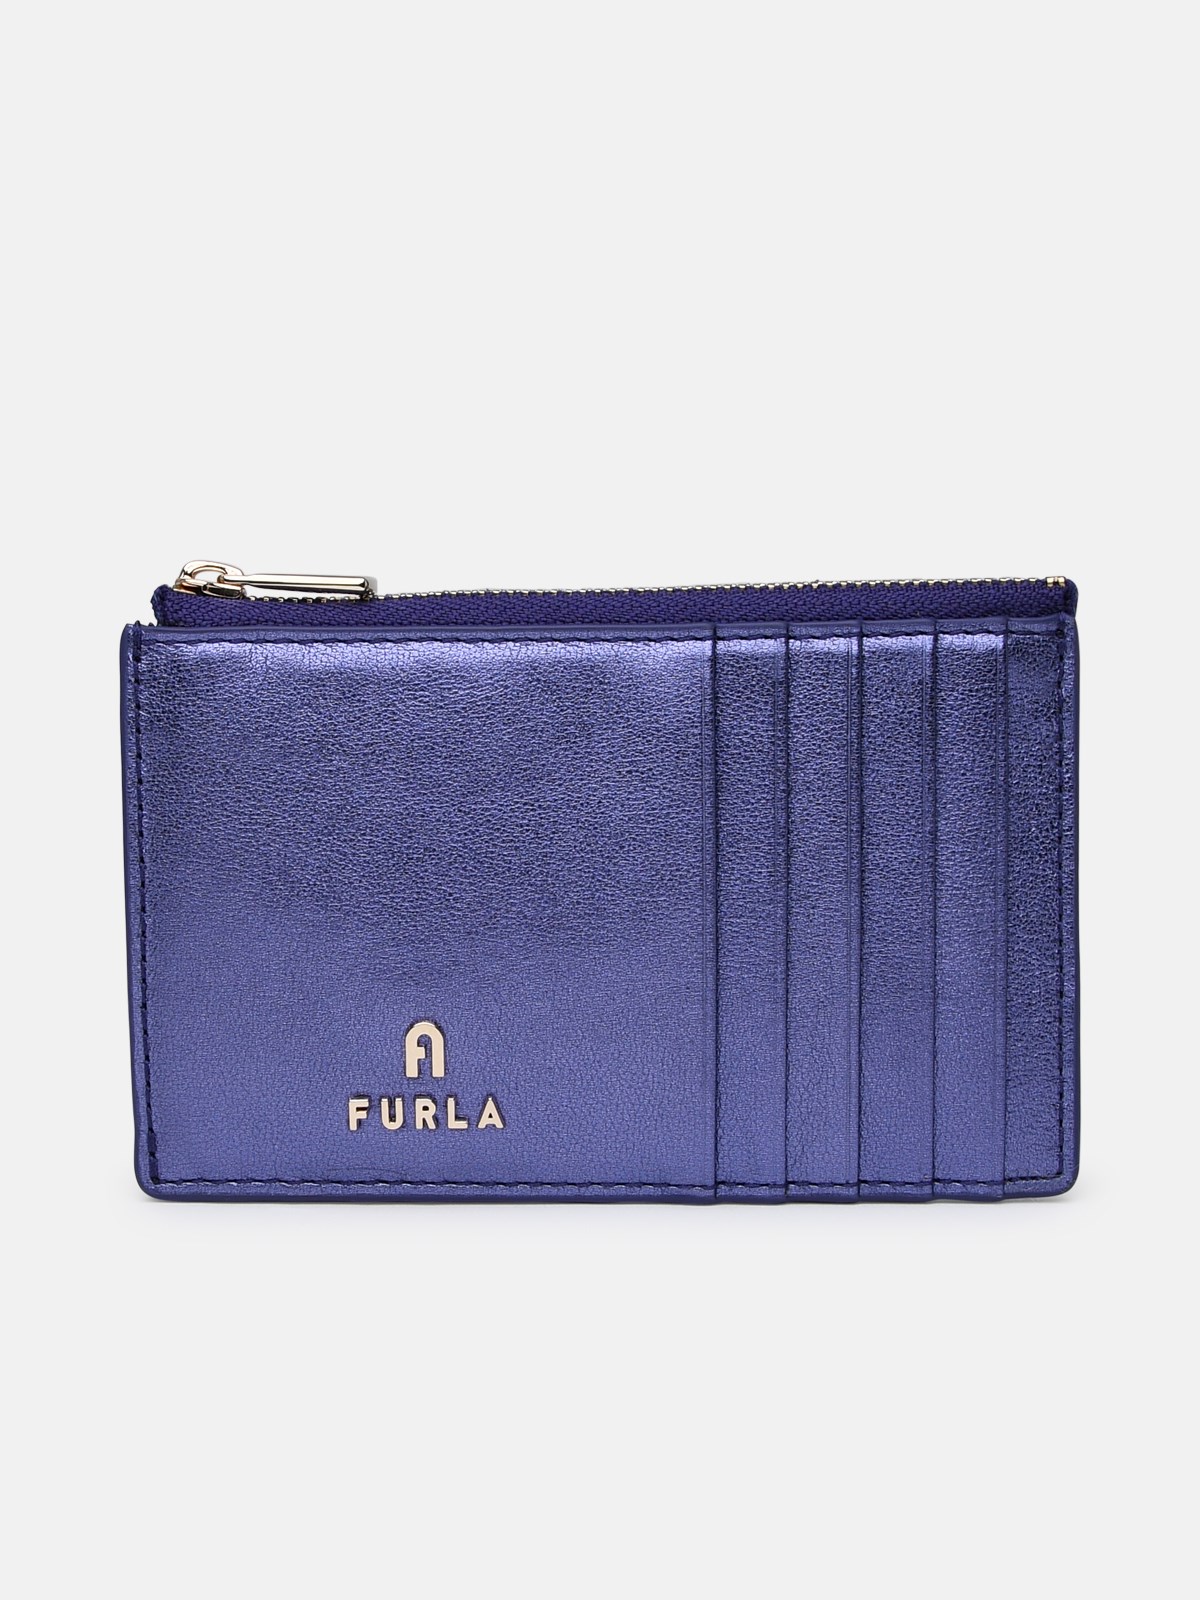 Furla Purple Leather Cardholder In Blue